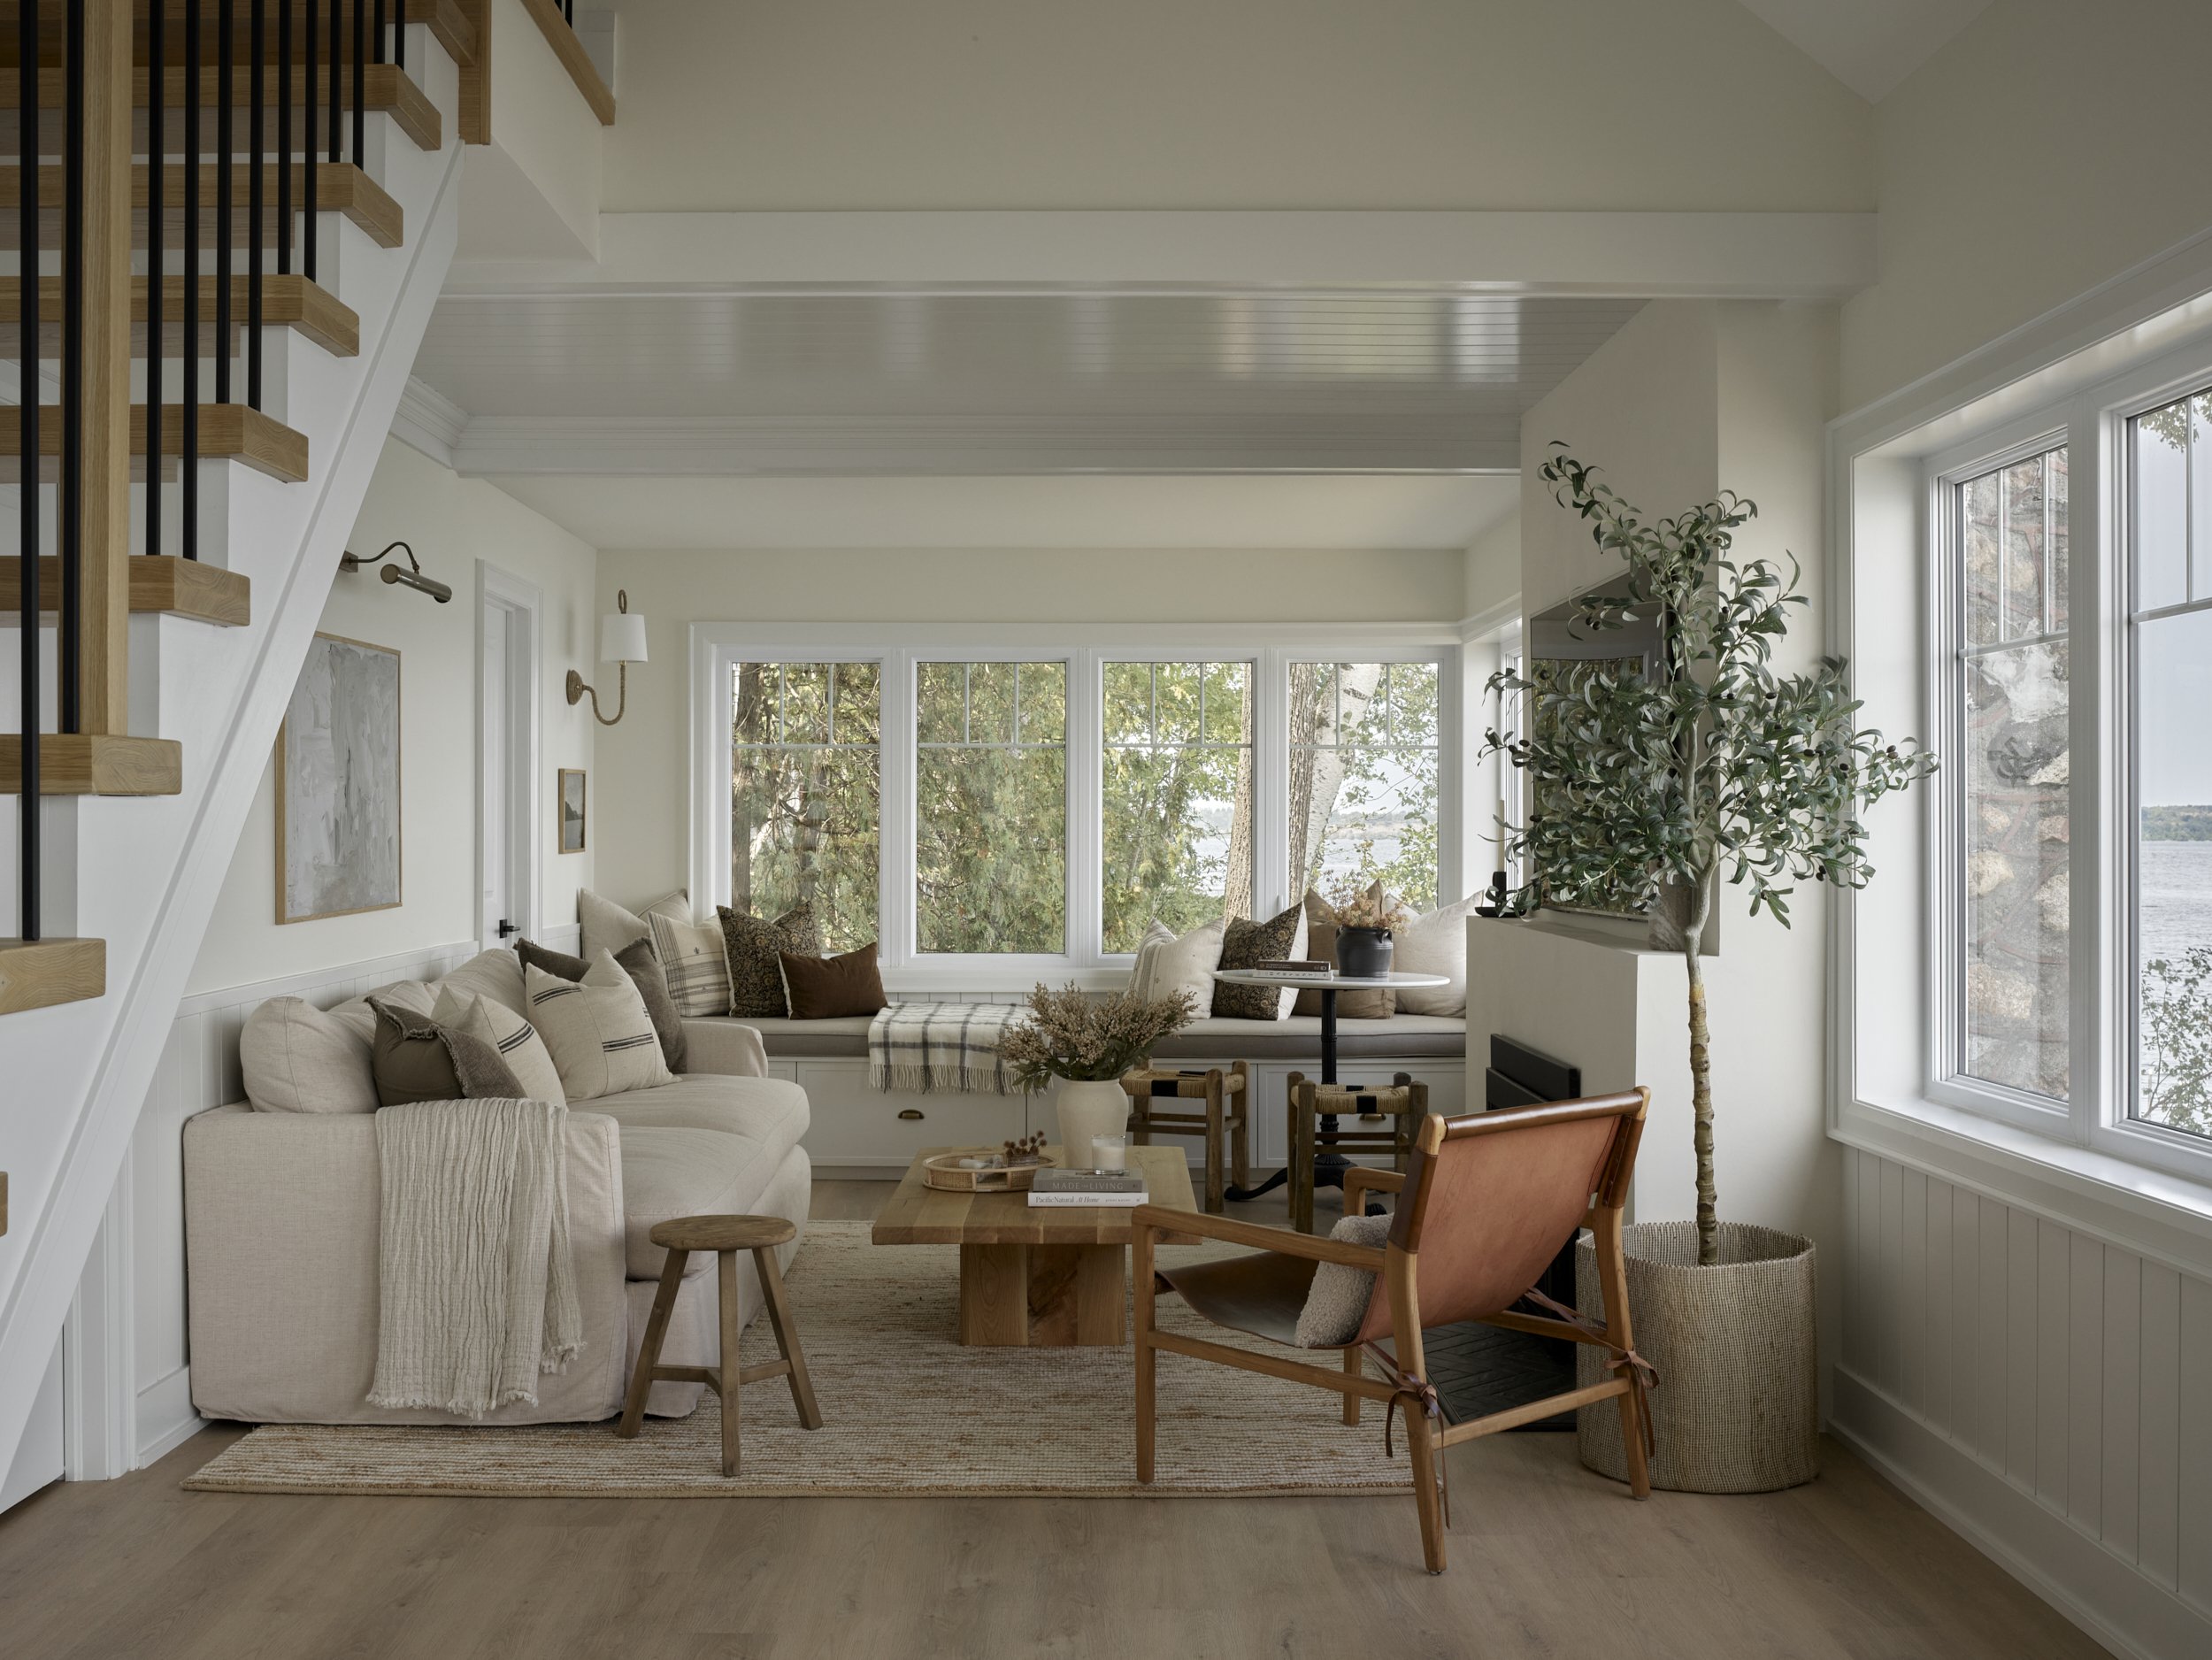 Stylish Cottage Living: 14 Decorating Ideas | Decoist